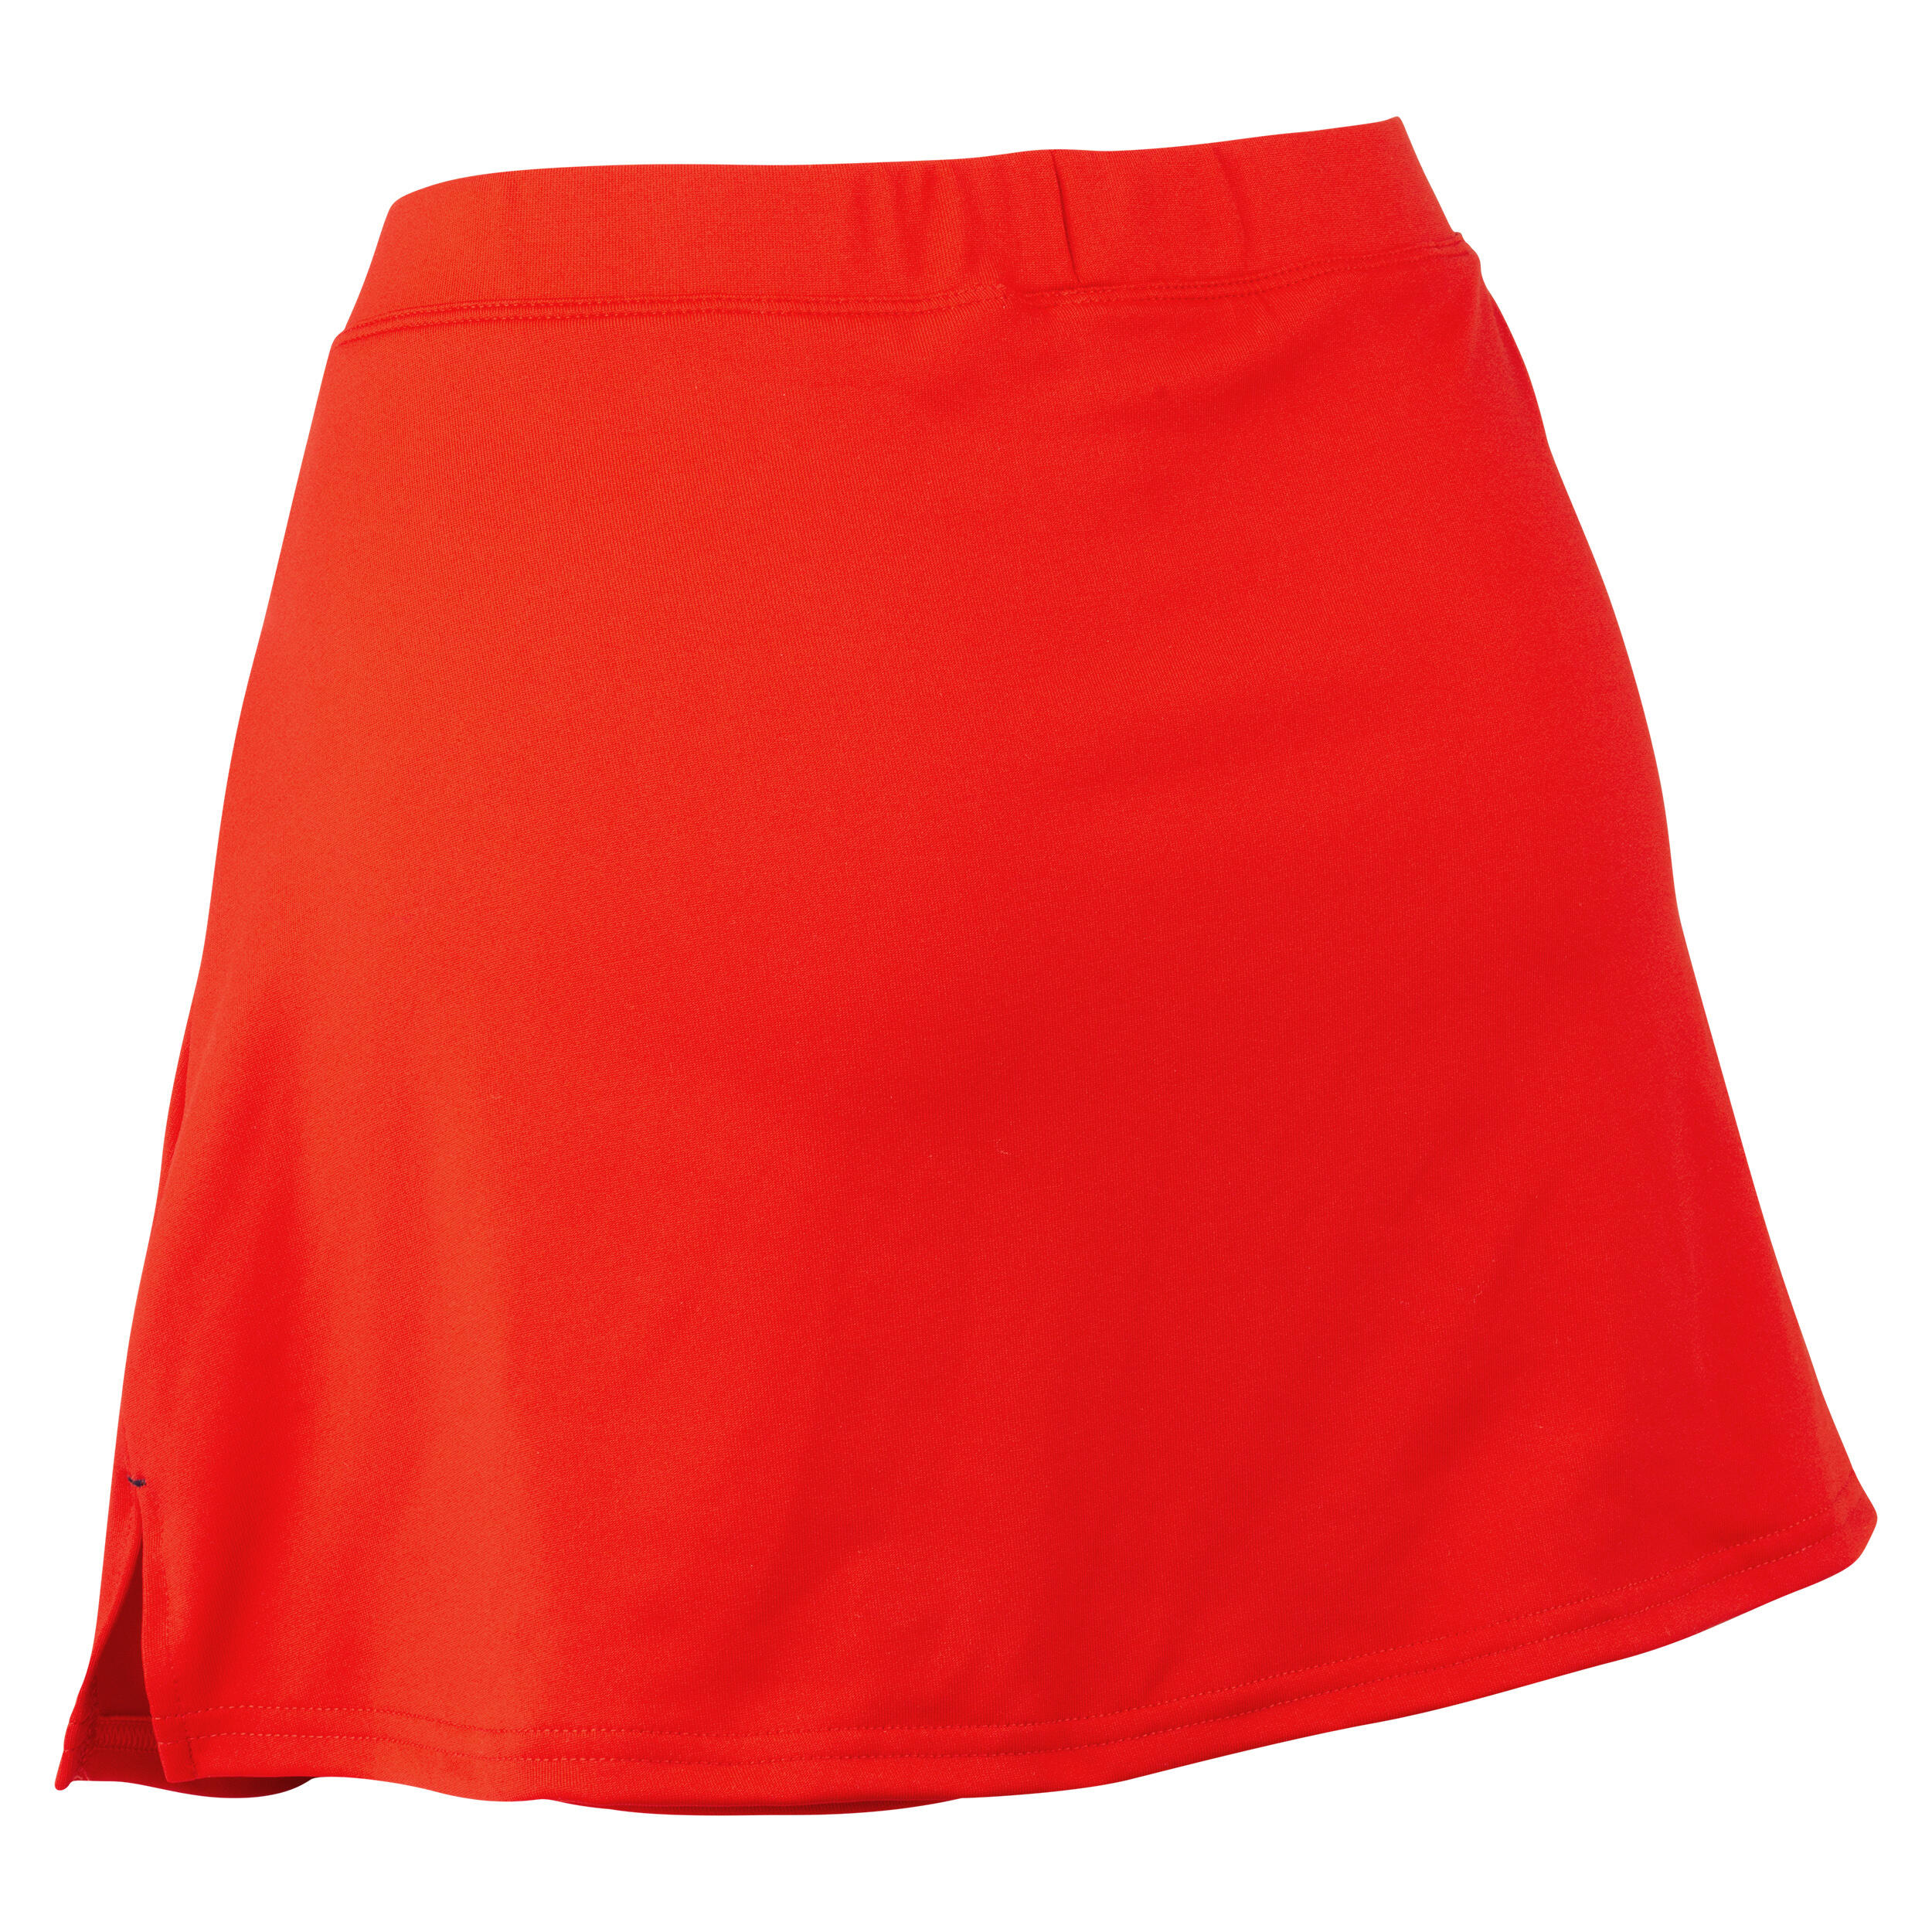 Women's Field Hockey Skirt FH500 - Red 4/4